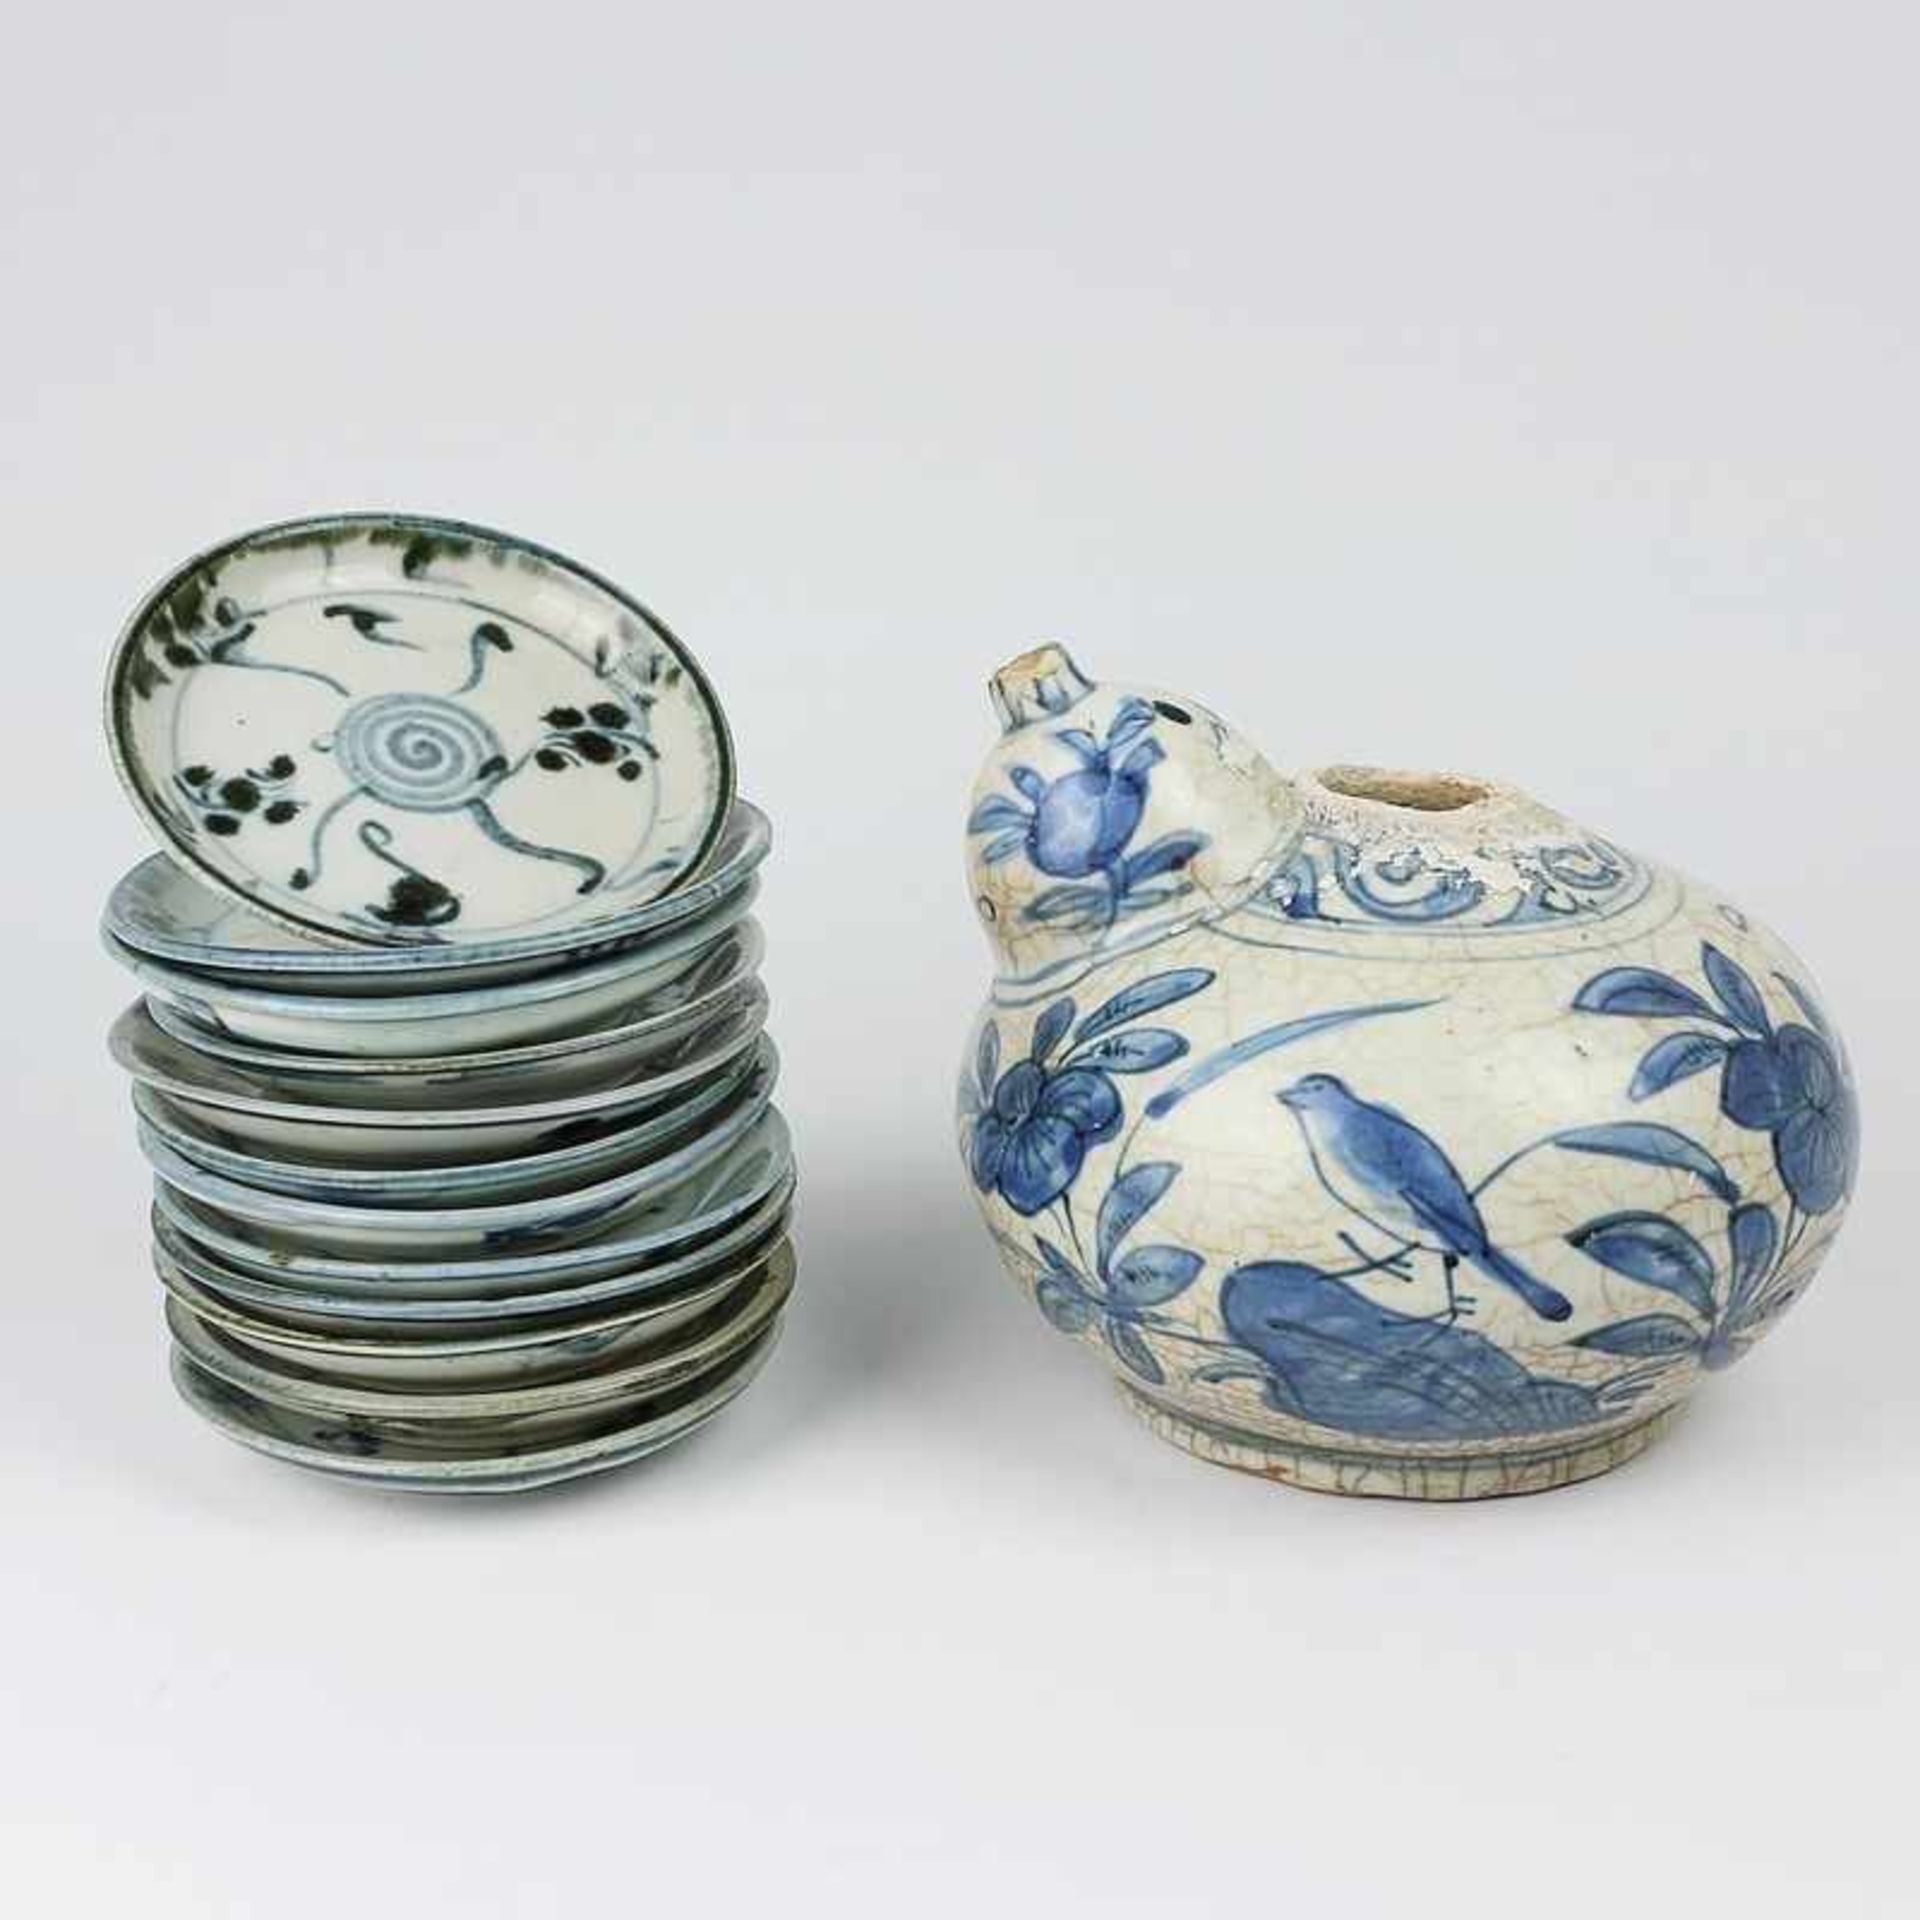 Konvolut 13 St., China, Keramik/Porzellan, Unterglasurblau, versch. Motive, Vogel, Ornamente, 1x